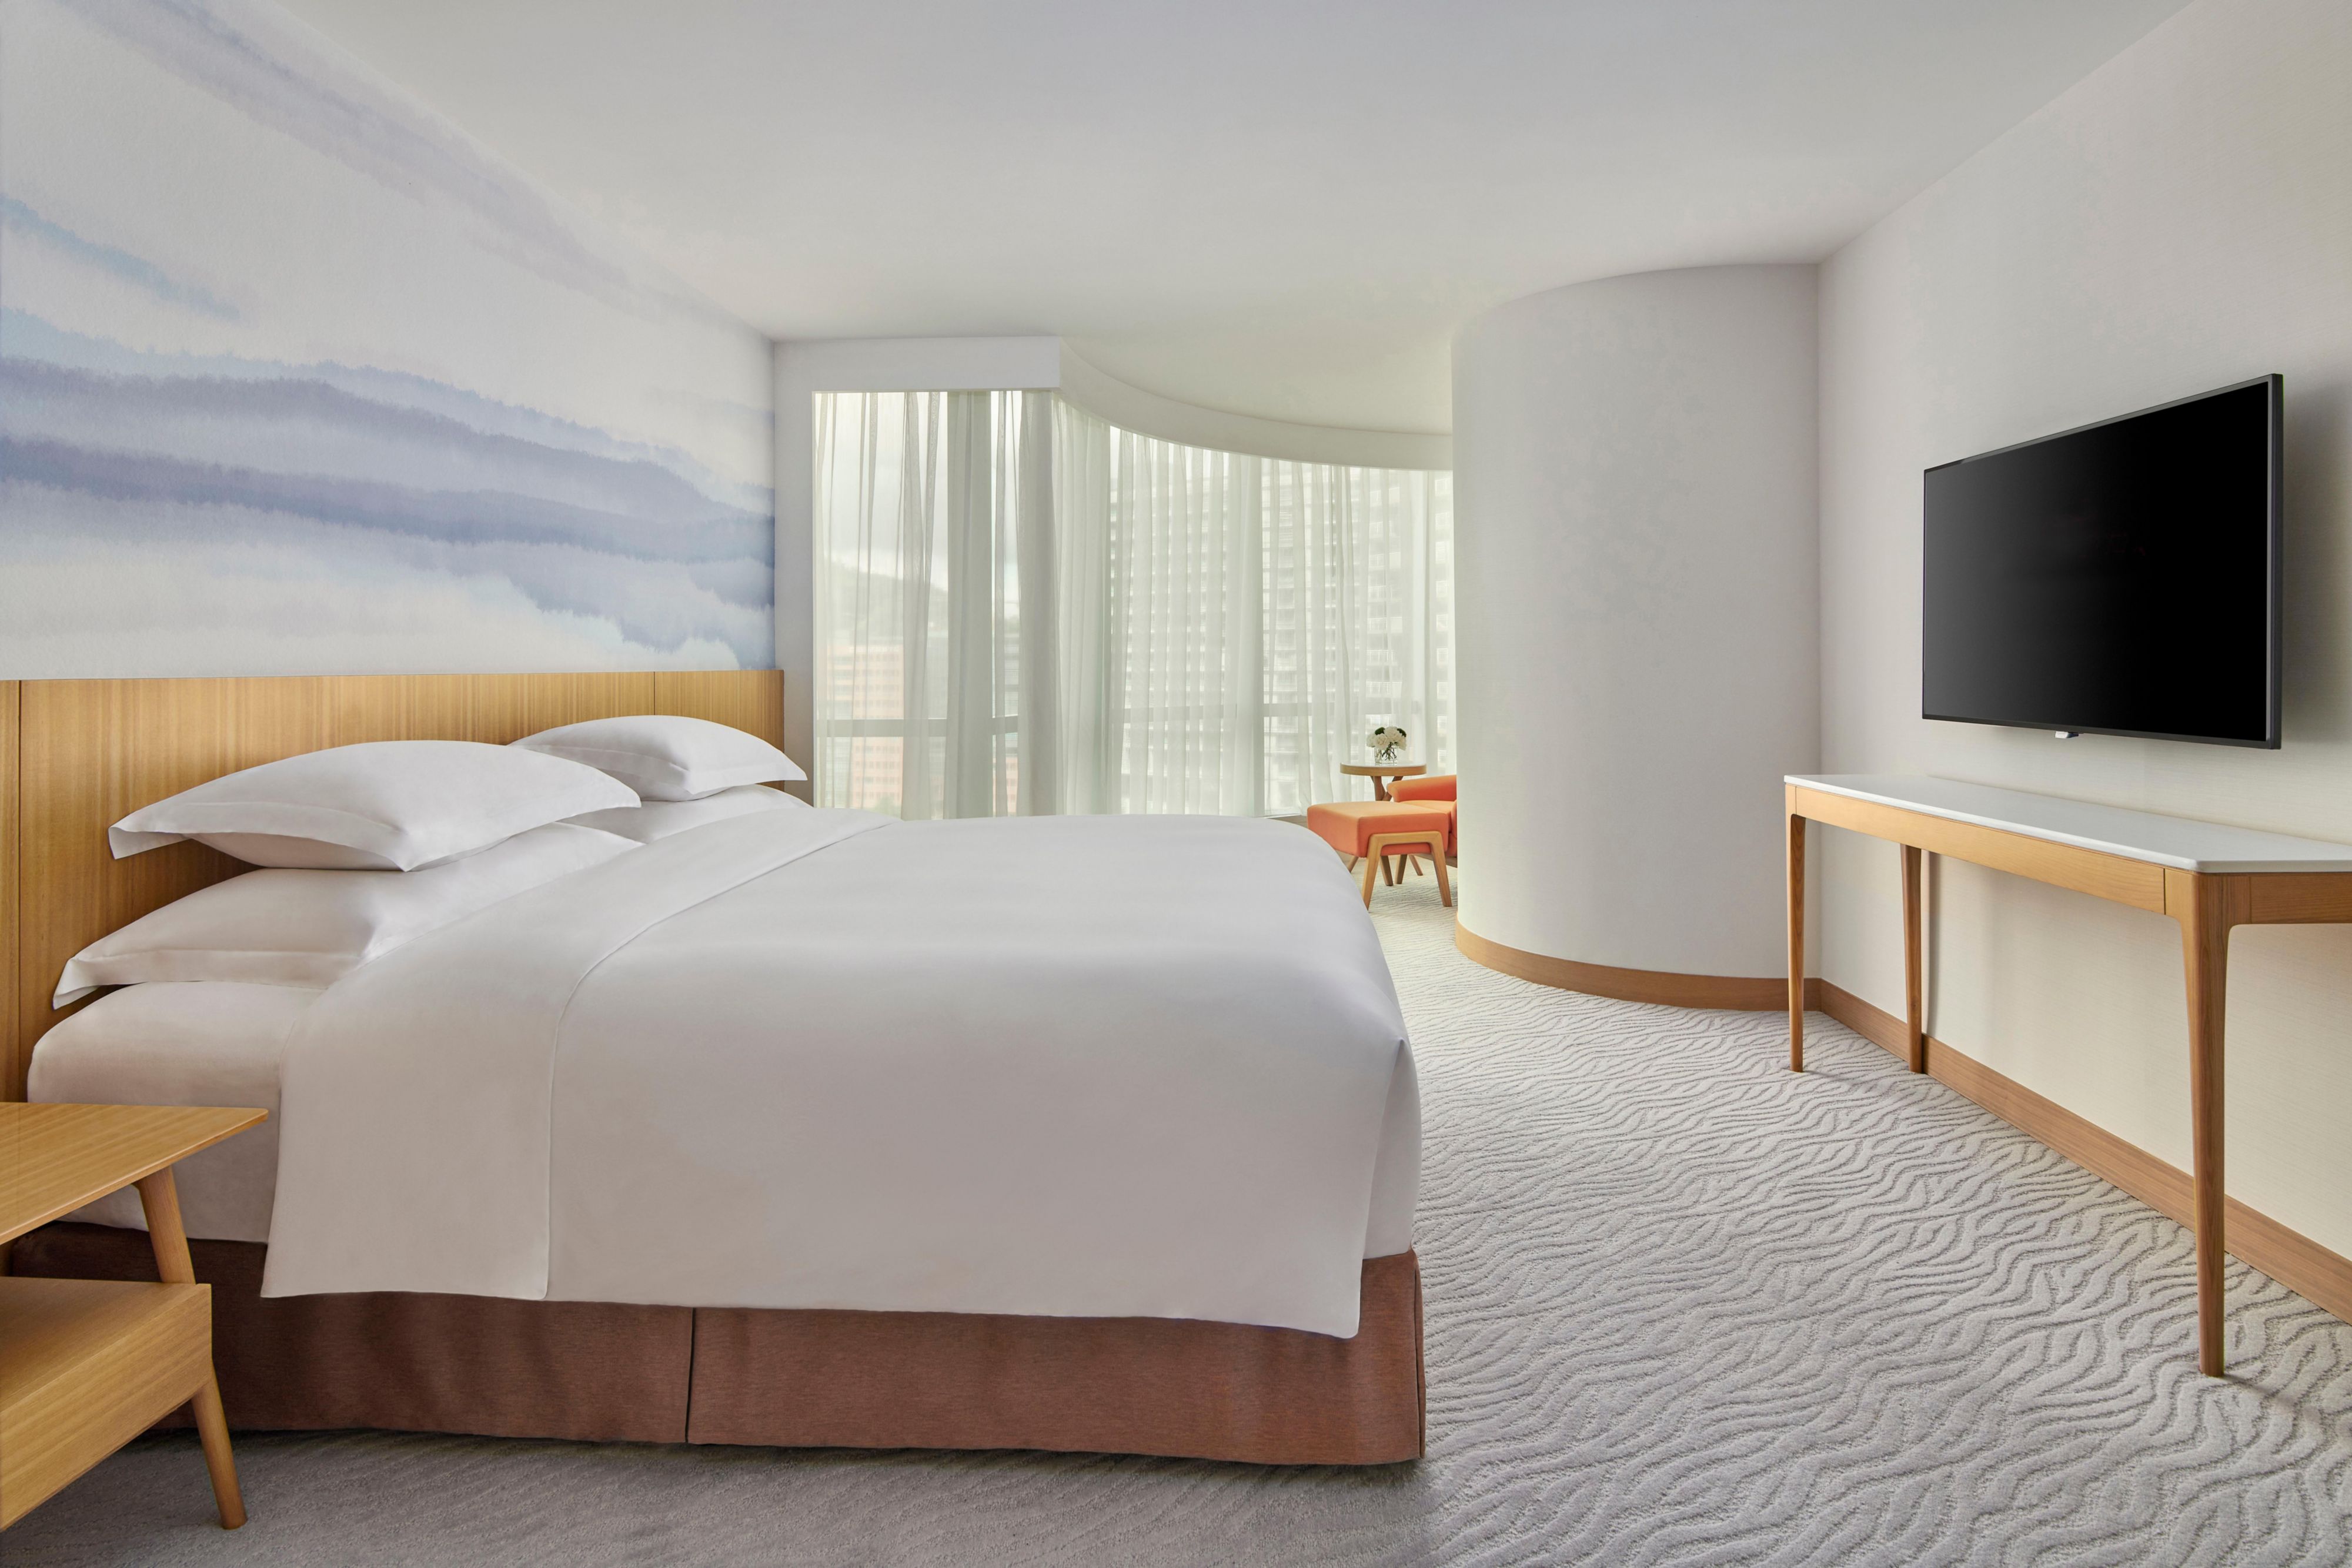 Crowne Plaza Superior Suite-Bedroom